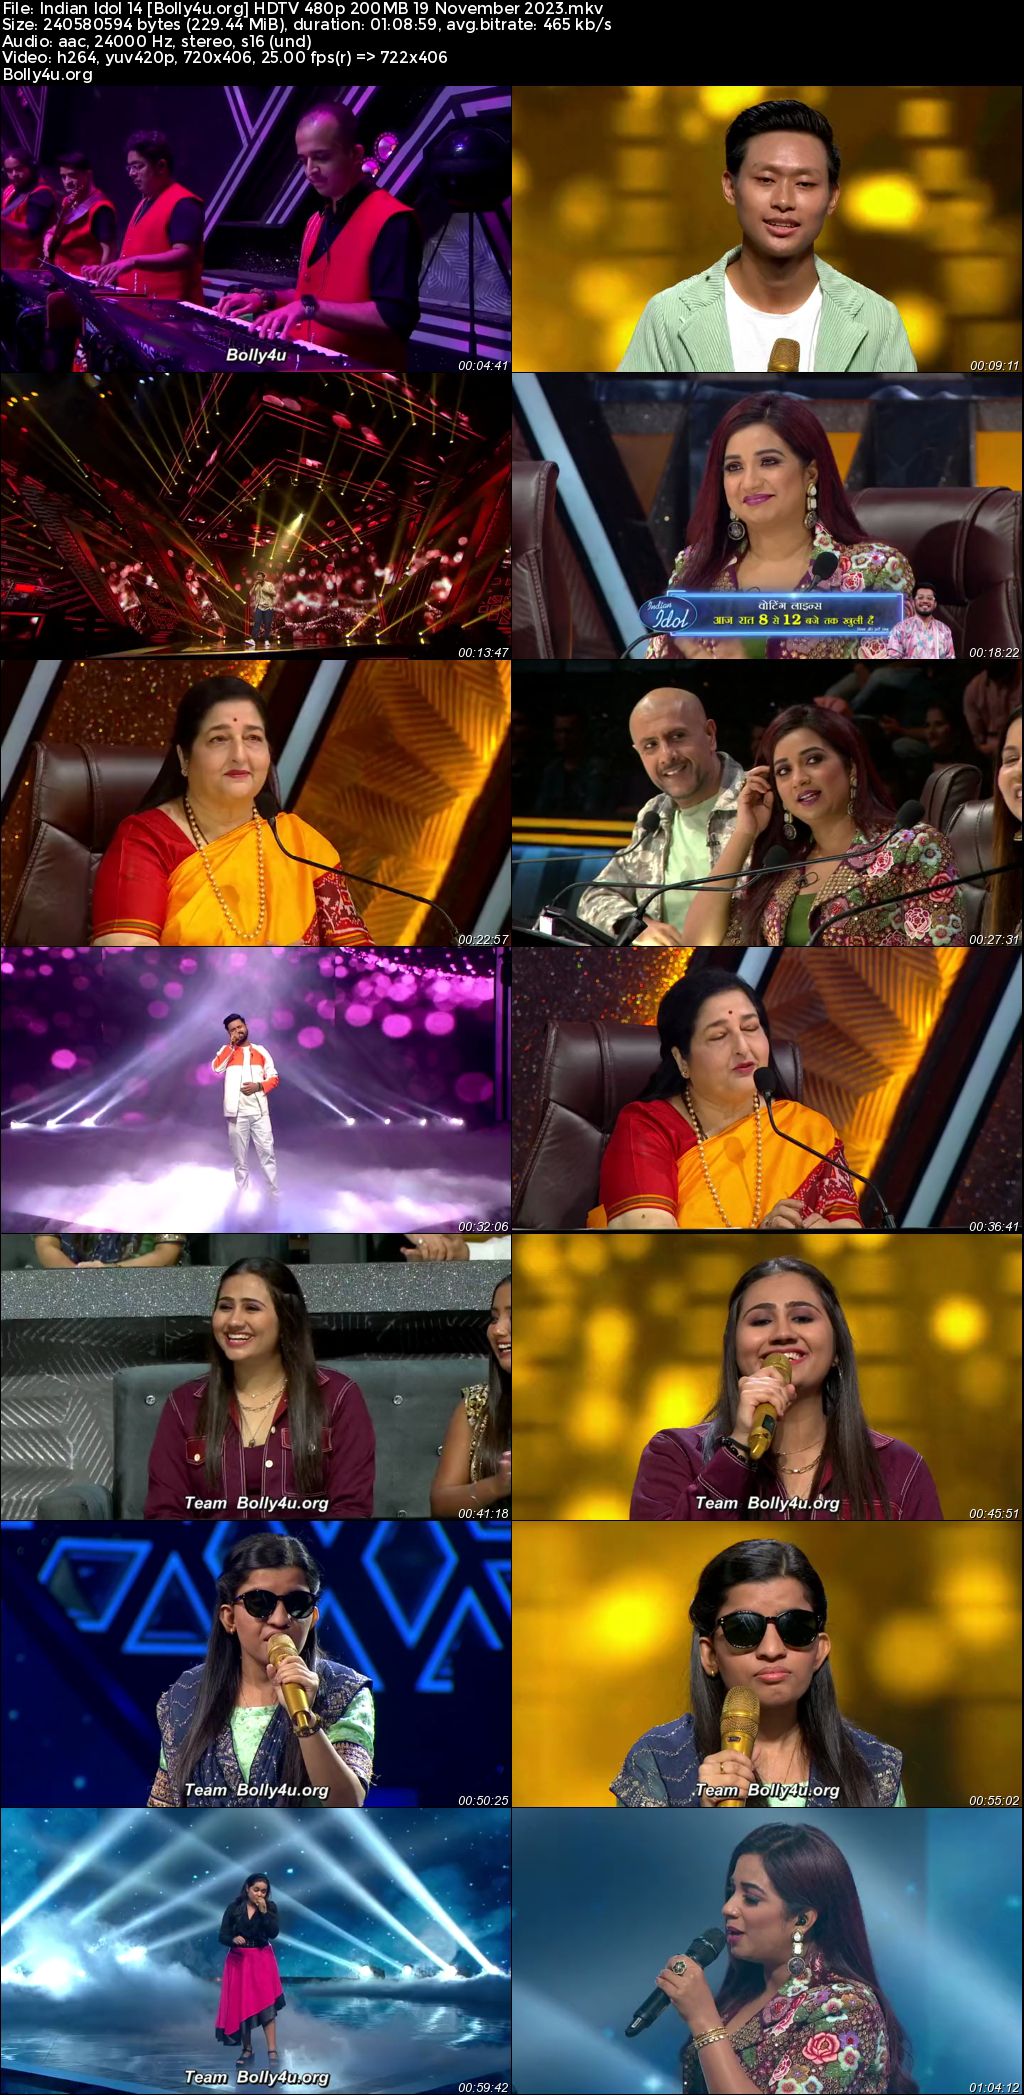 Indian Idol 14 HDTV 480p 200MB 19 November 2023 Download